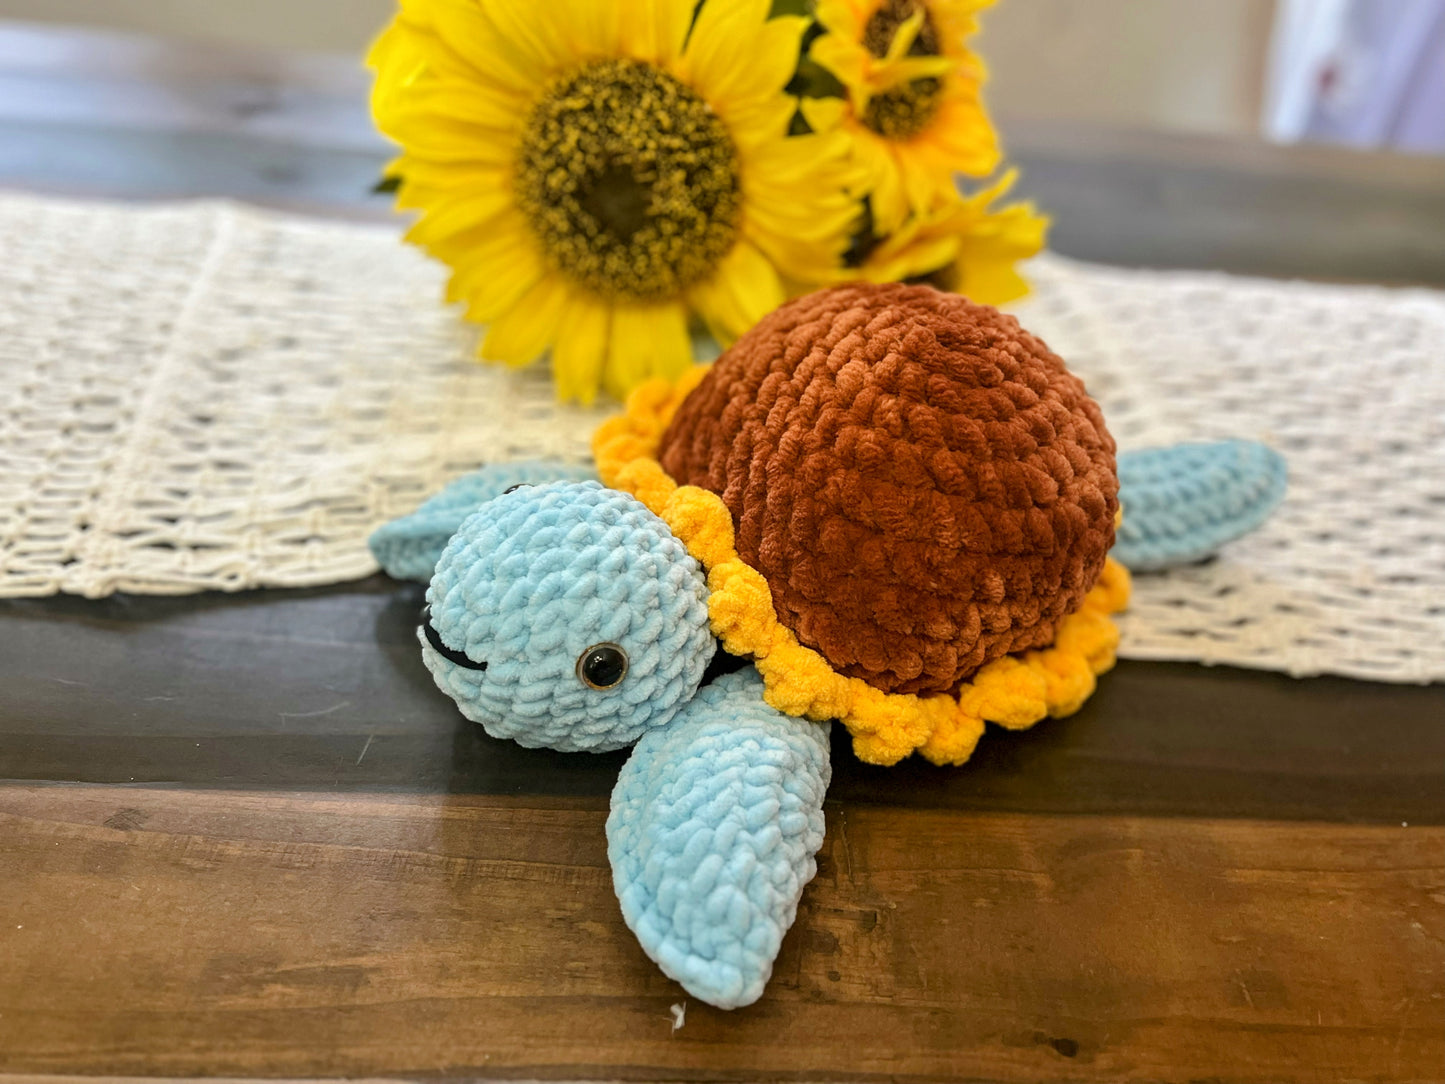 Sunflower 🌻  Seaturtle 🐢 - Crochet Knitted Amigurumi Toy